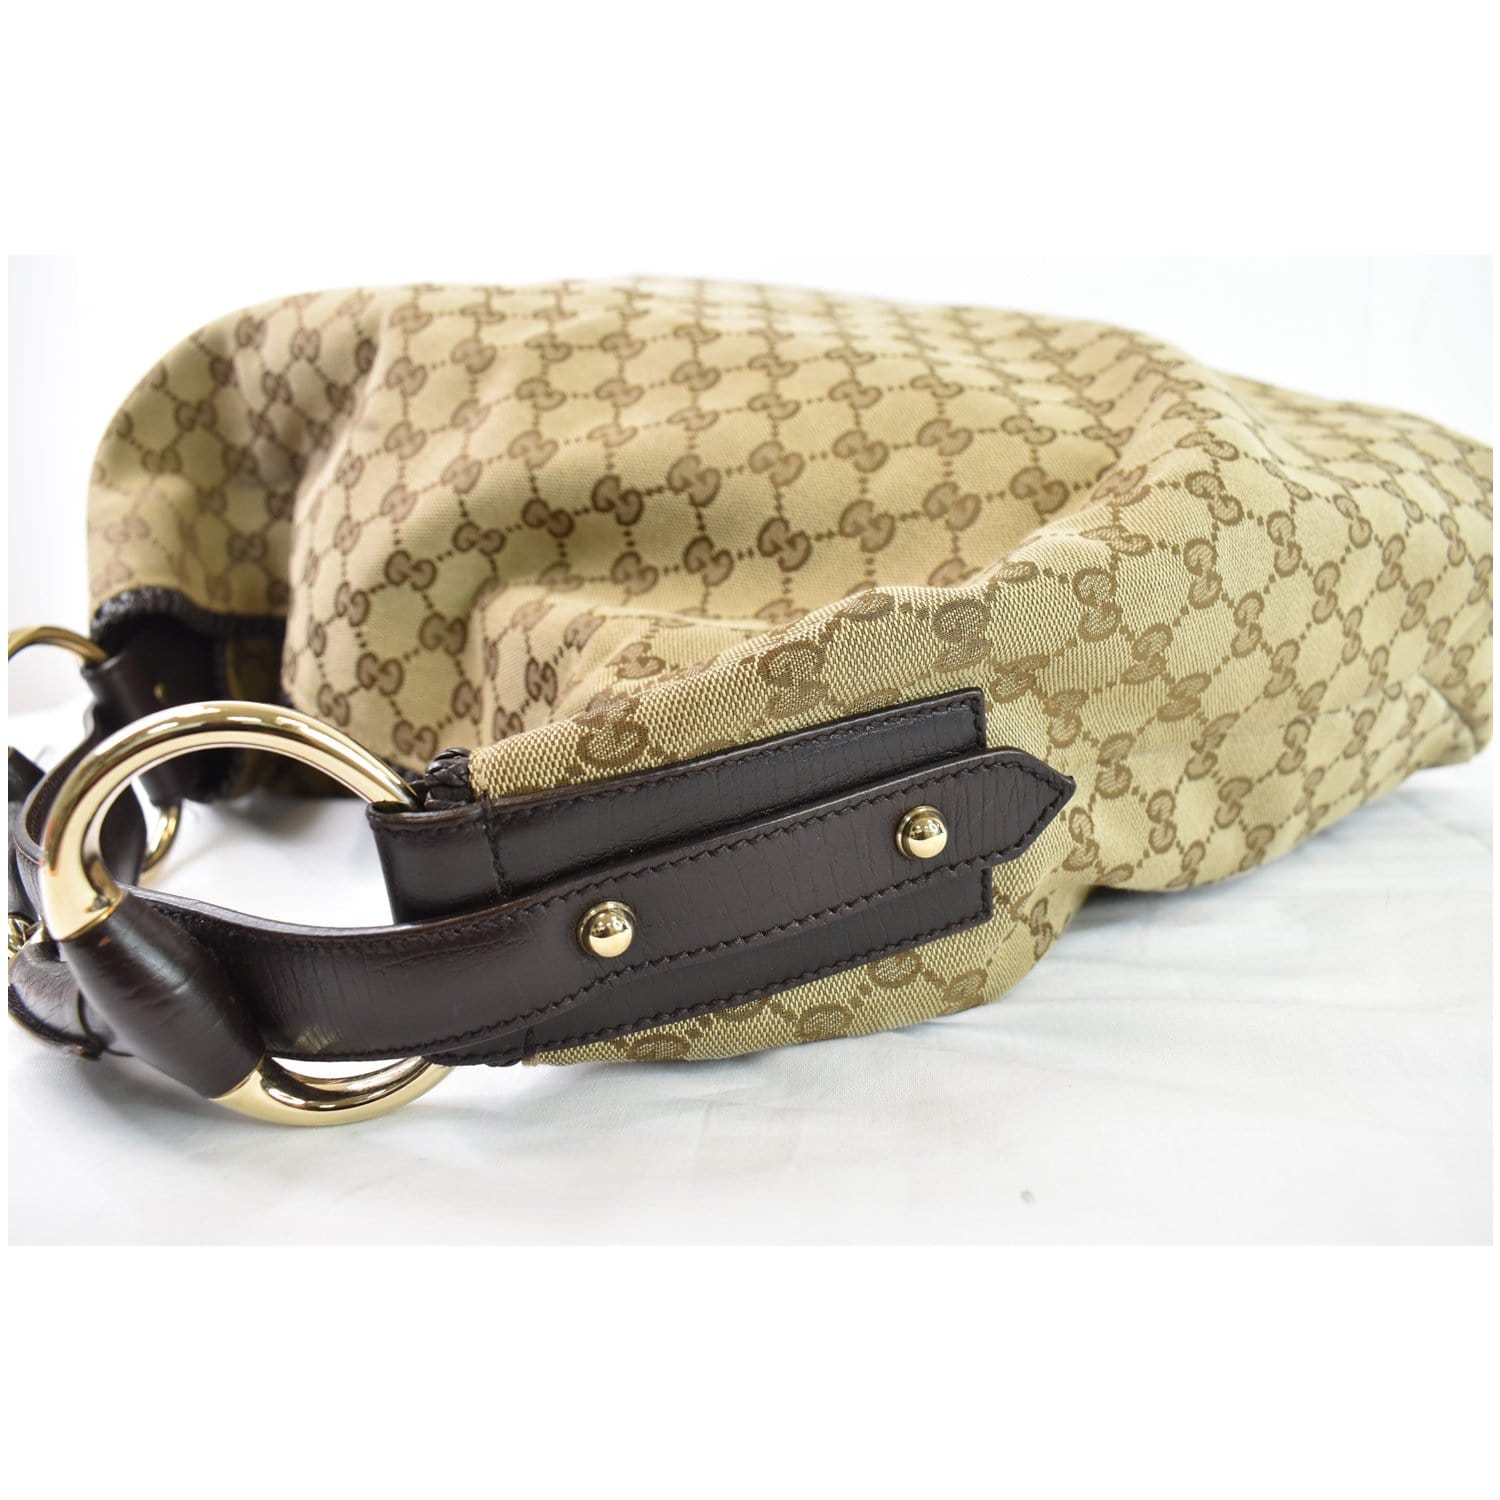 Gucci GG Canvas Large Horsebit Hobo - Neutrals Hobos, Handbags